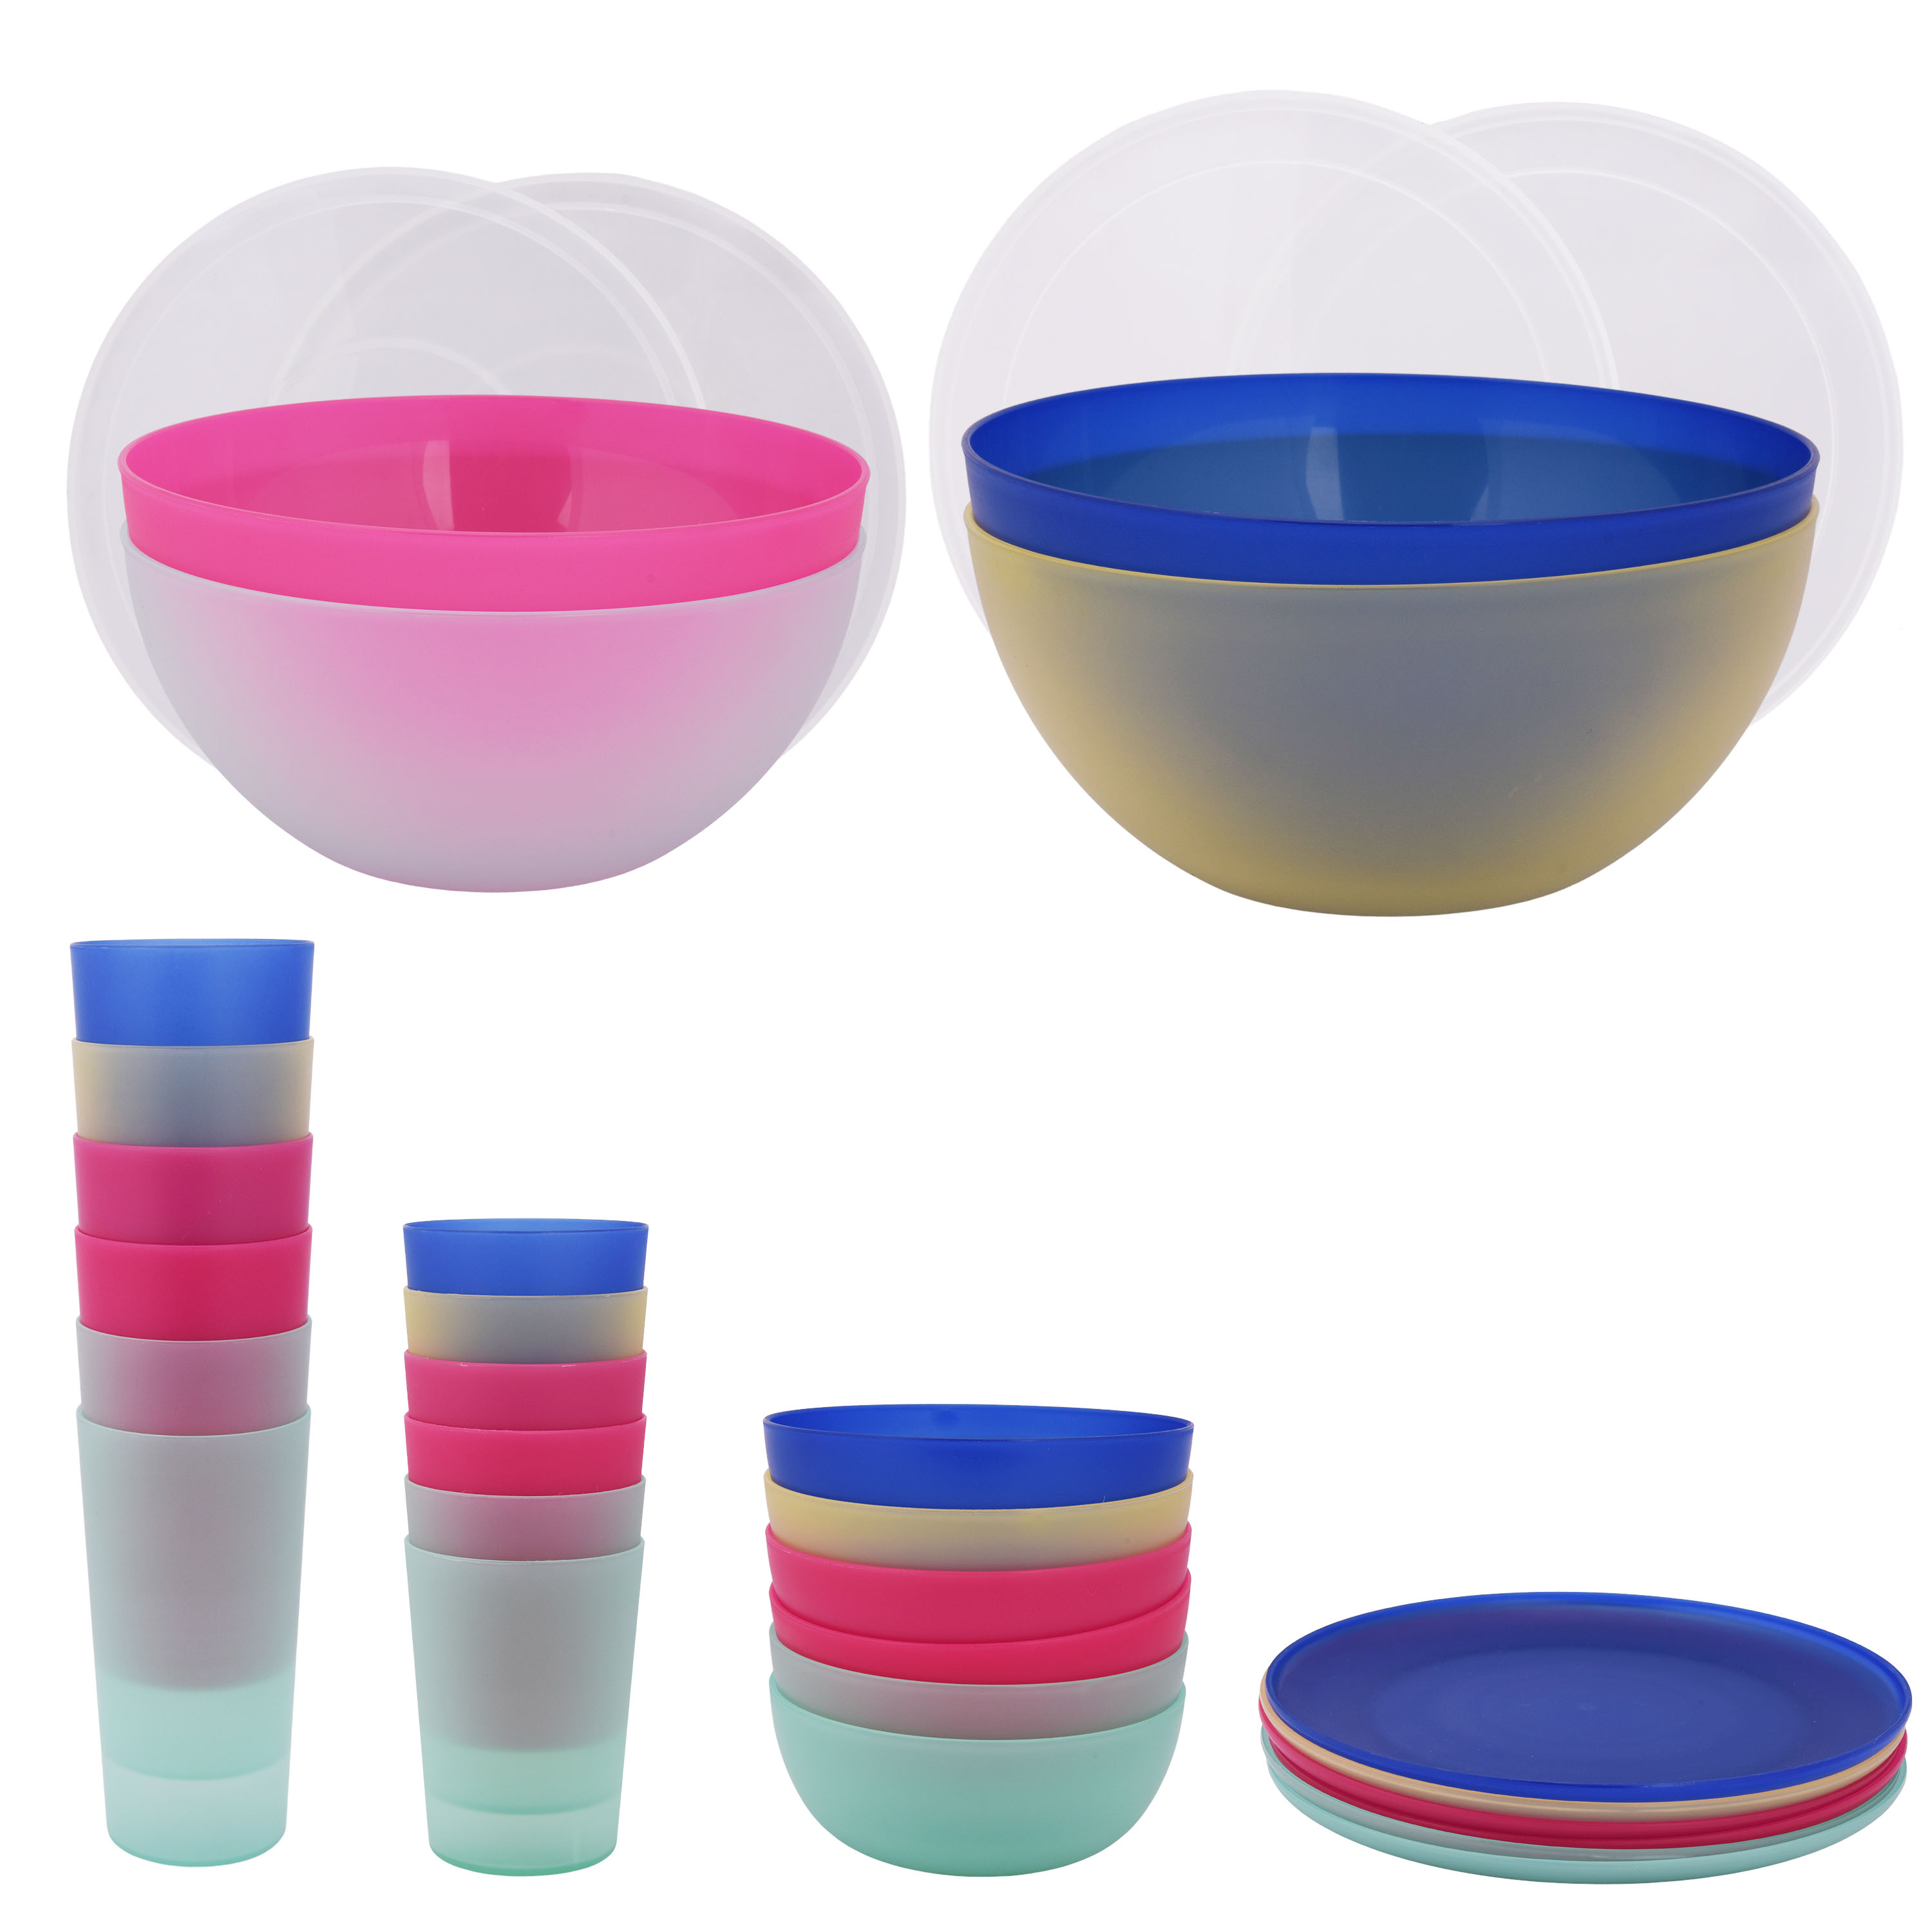 Mainstays 32-Piece Round Plastic Dinnerware Bundle Set, Multicolor - image 1 of 24